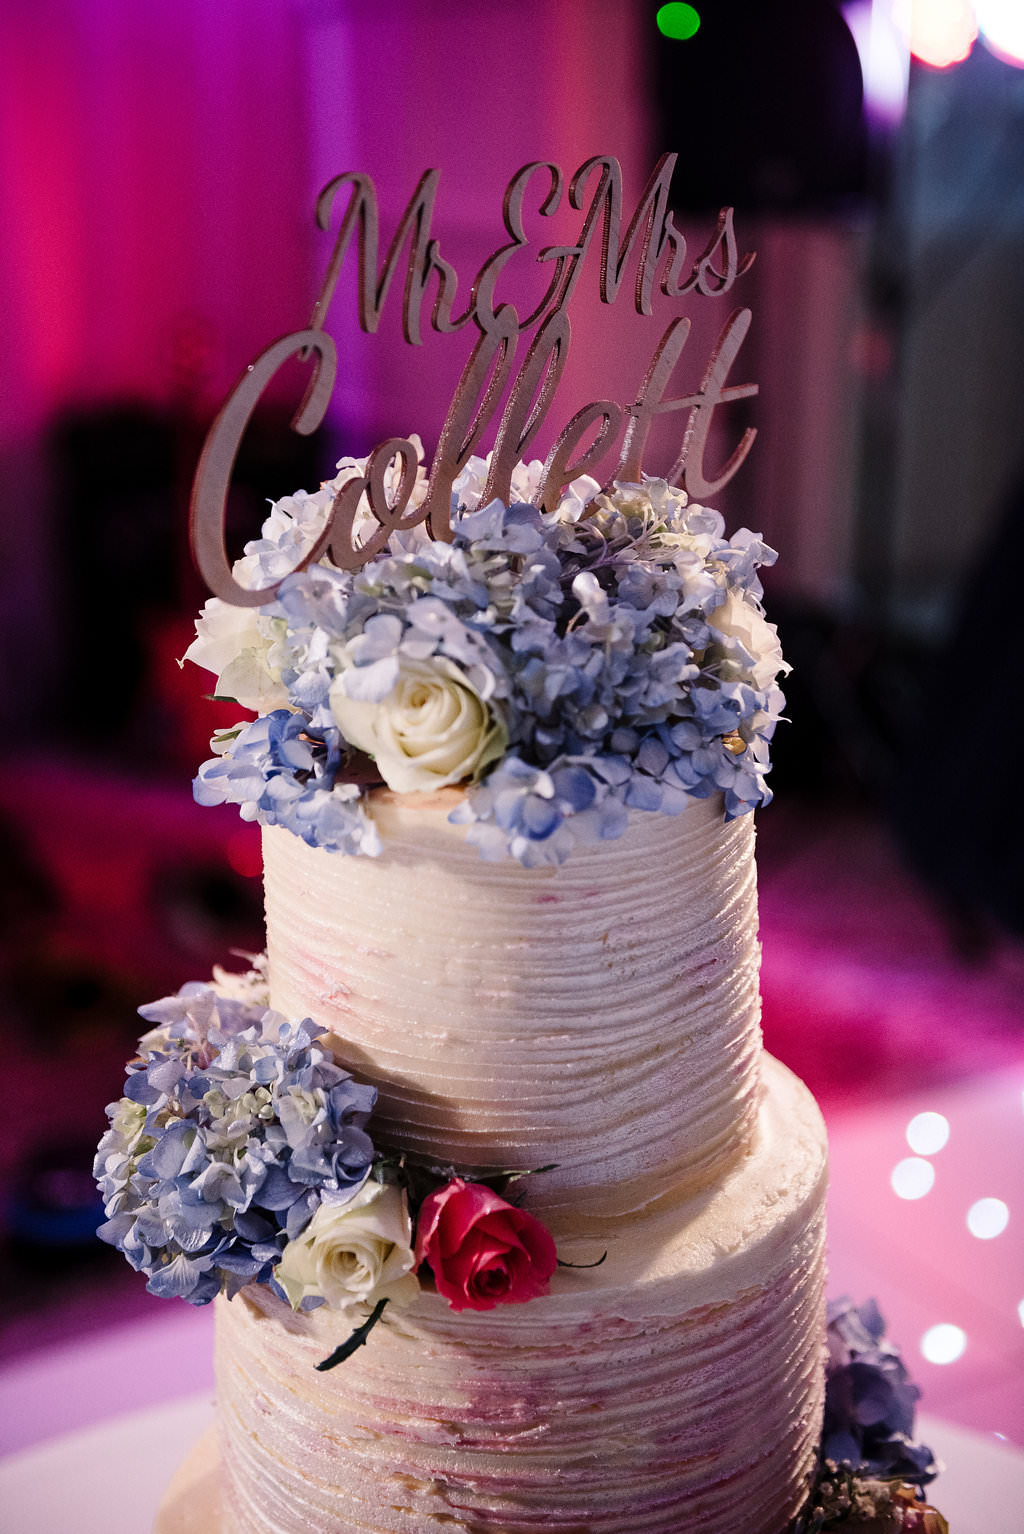 Colourful photo of the wedding cake.